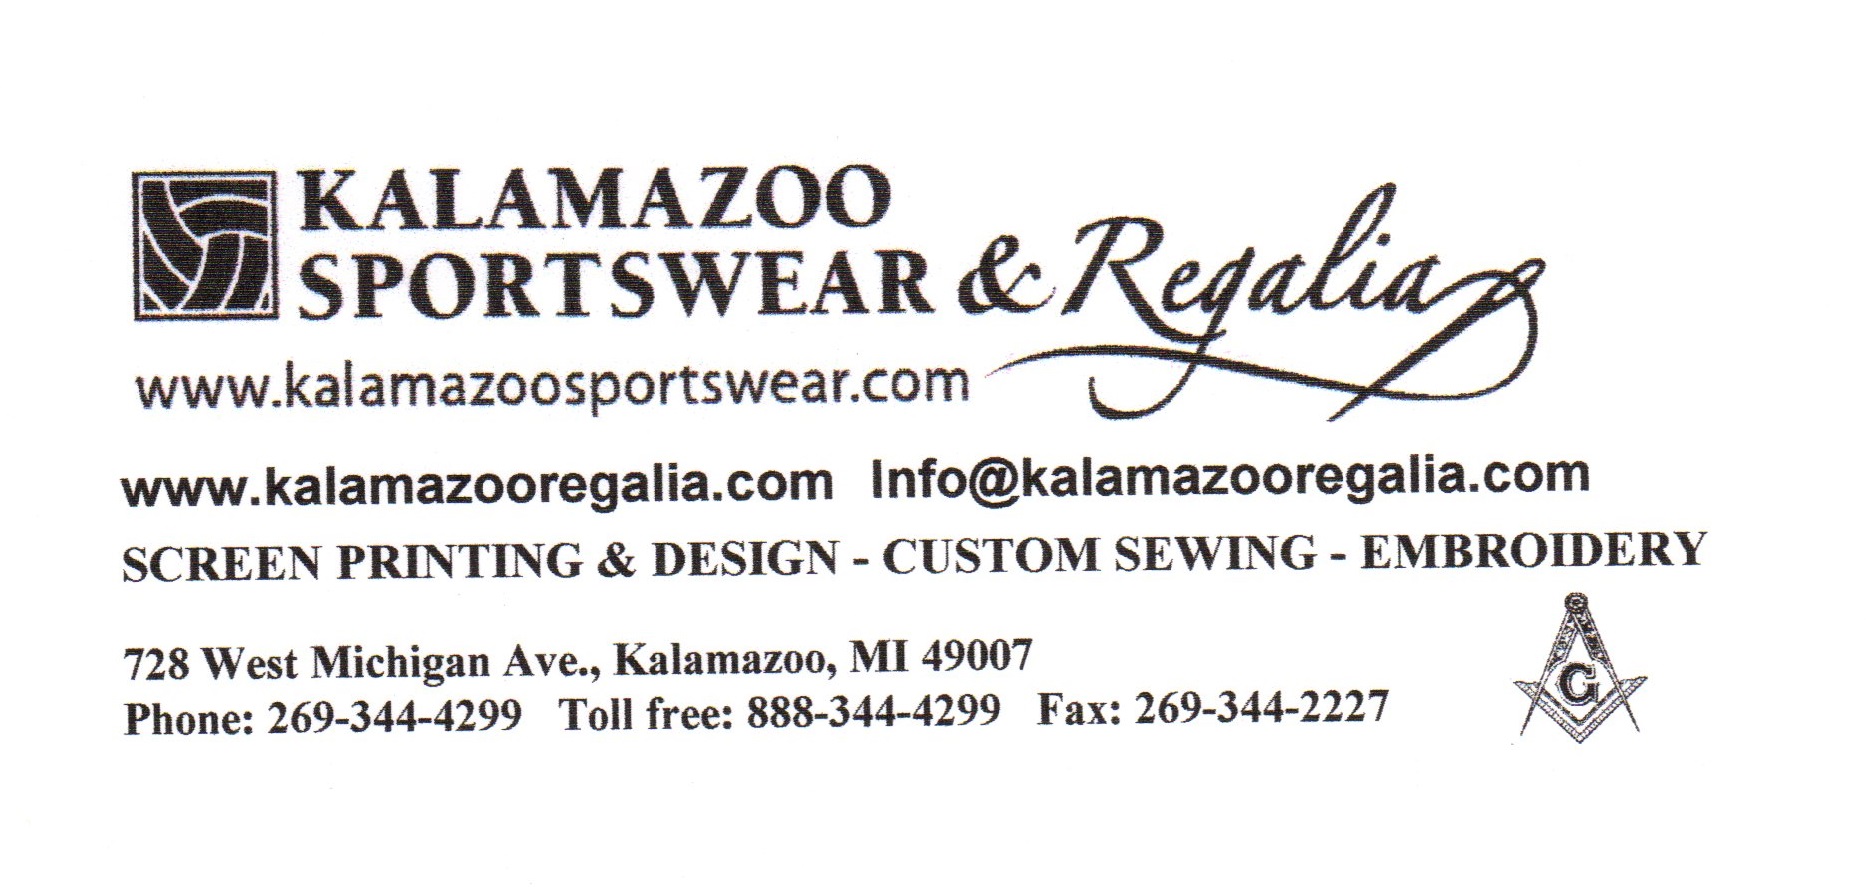 Kalamazoo Sportswear